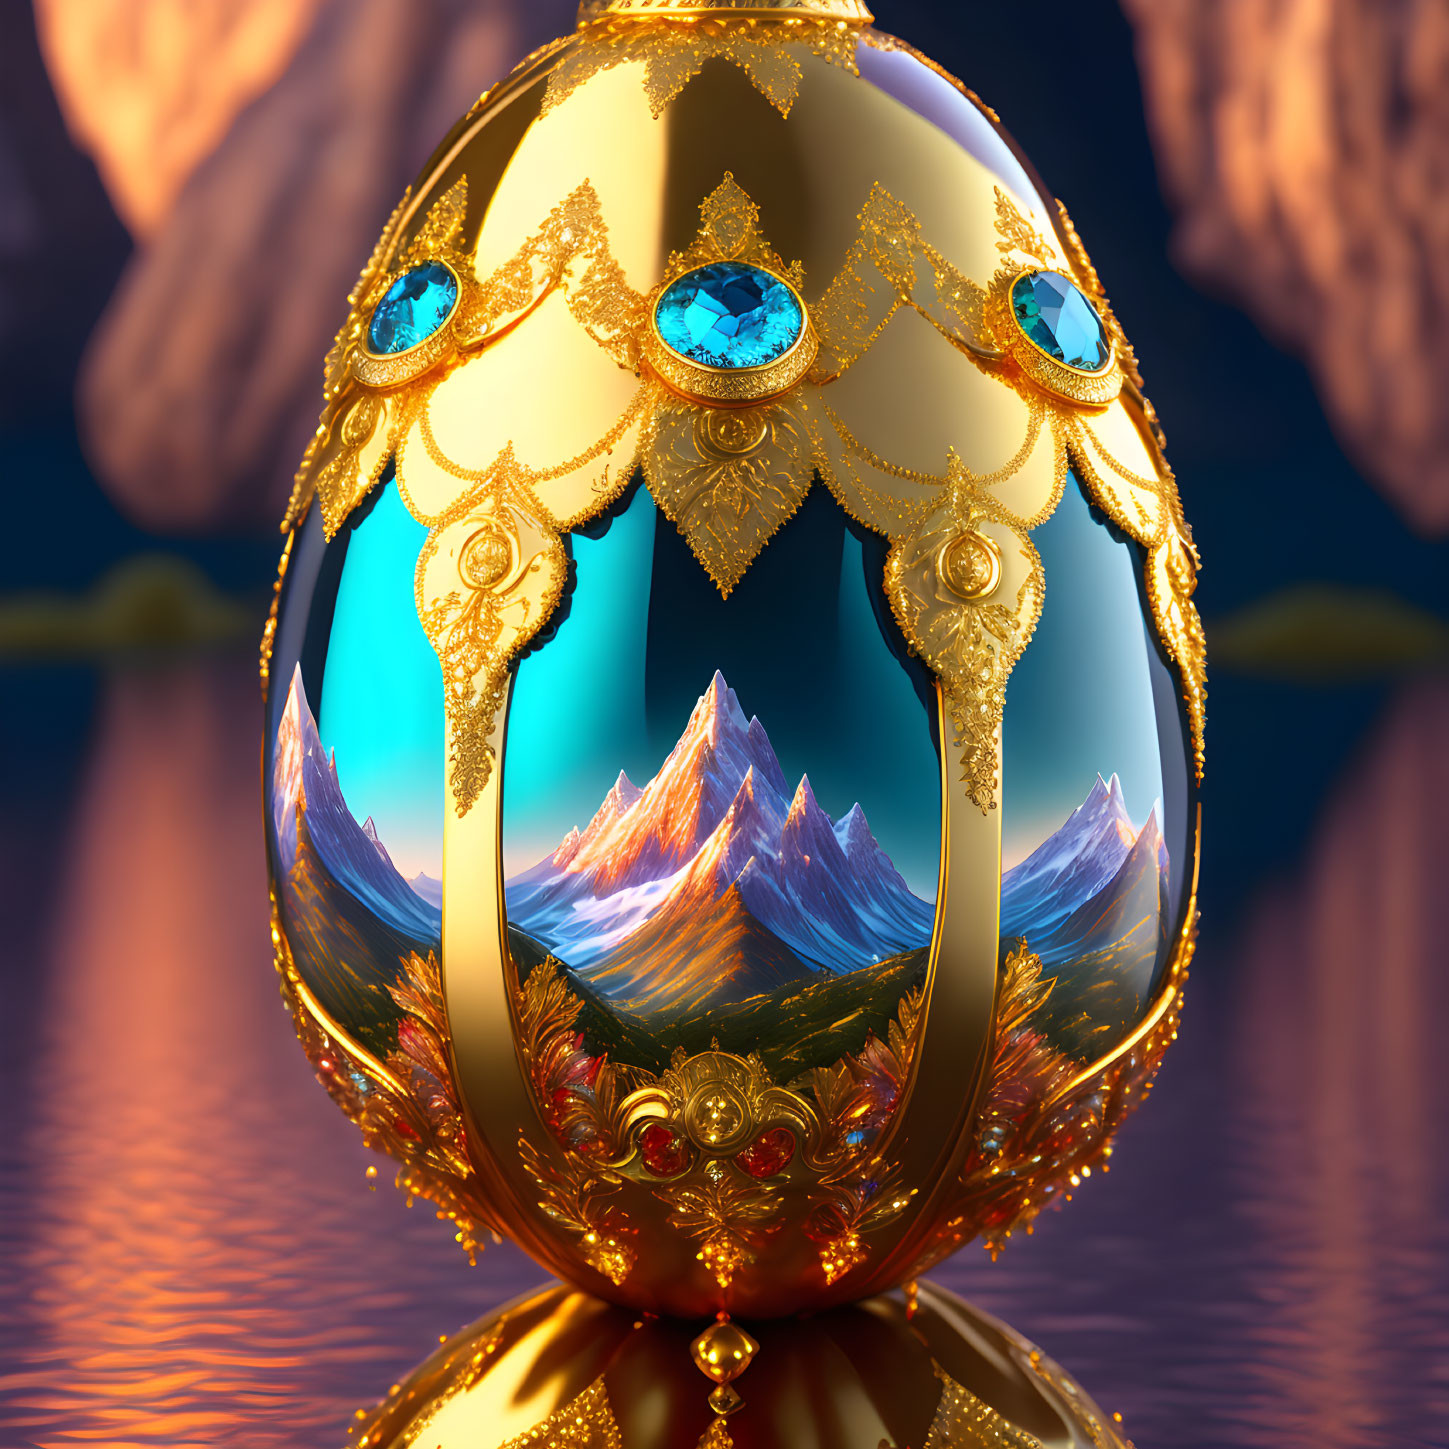 Golden Egg with Blue Gemstones Depicting Mountain Landscape at Twilight